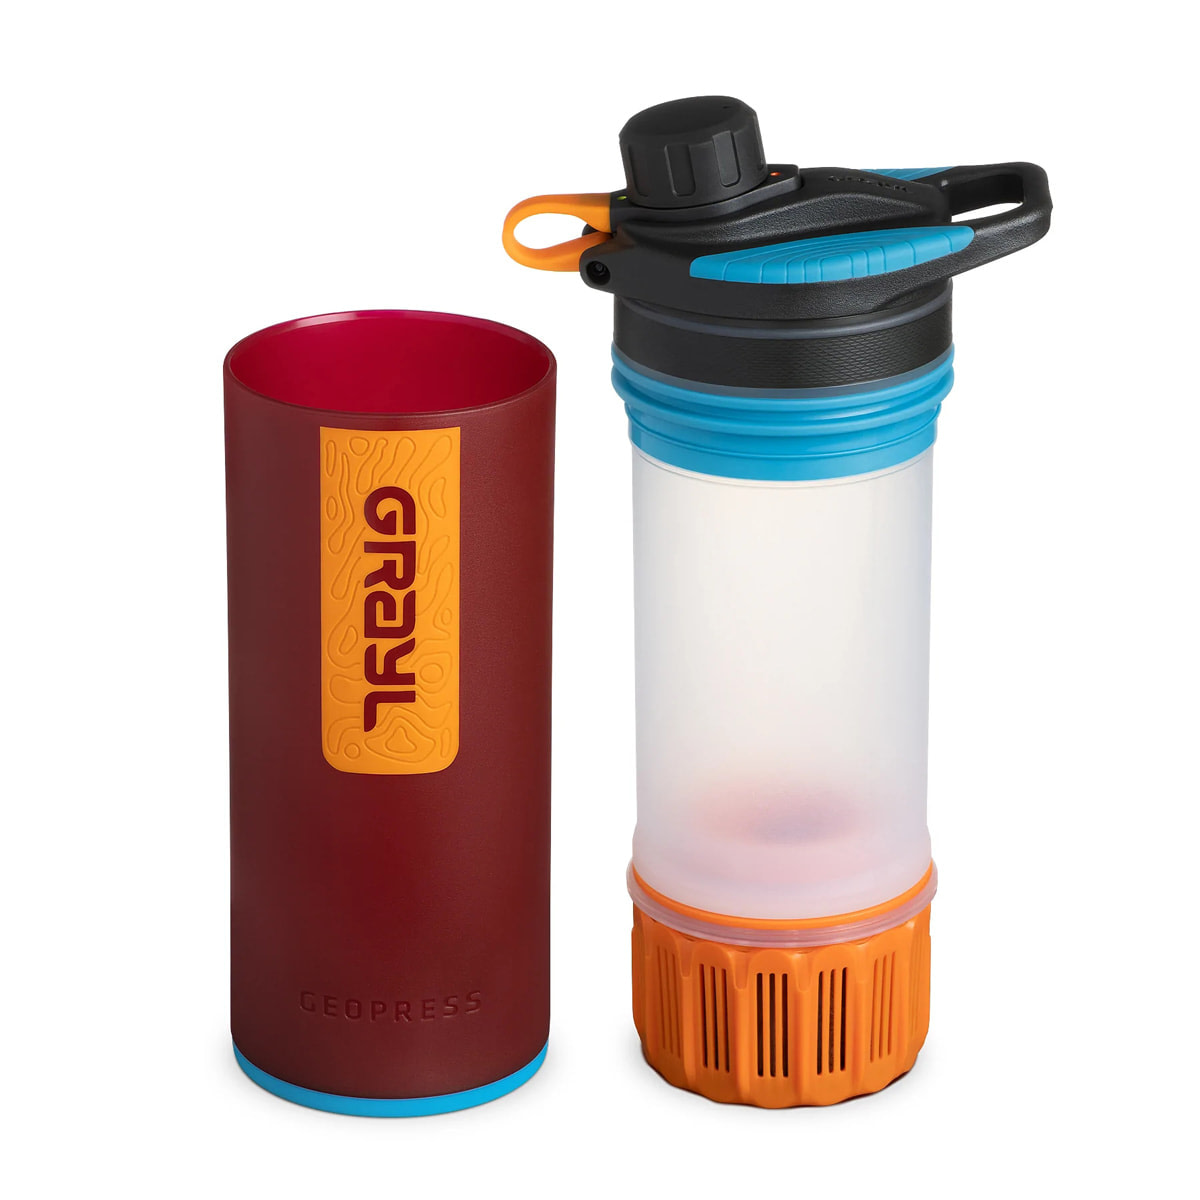 Water Bottle Filter & Purifier